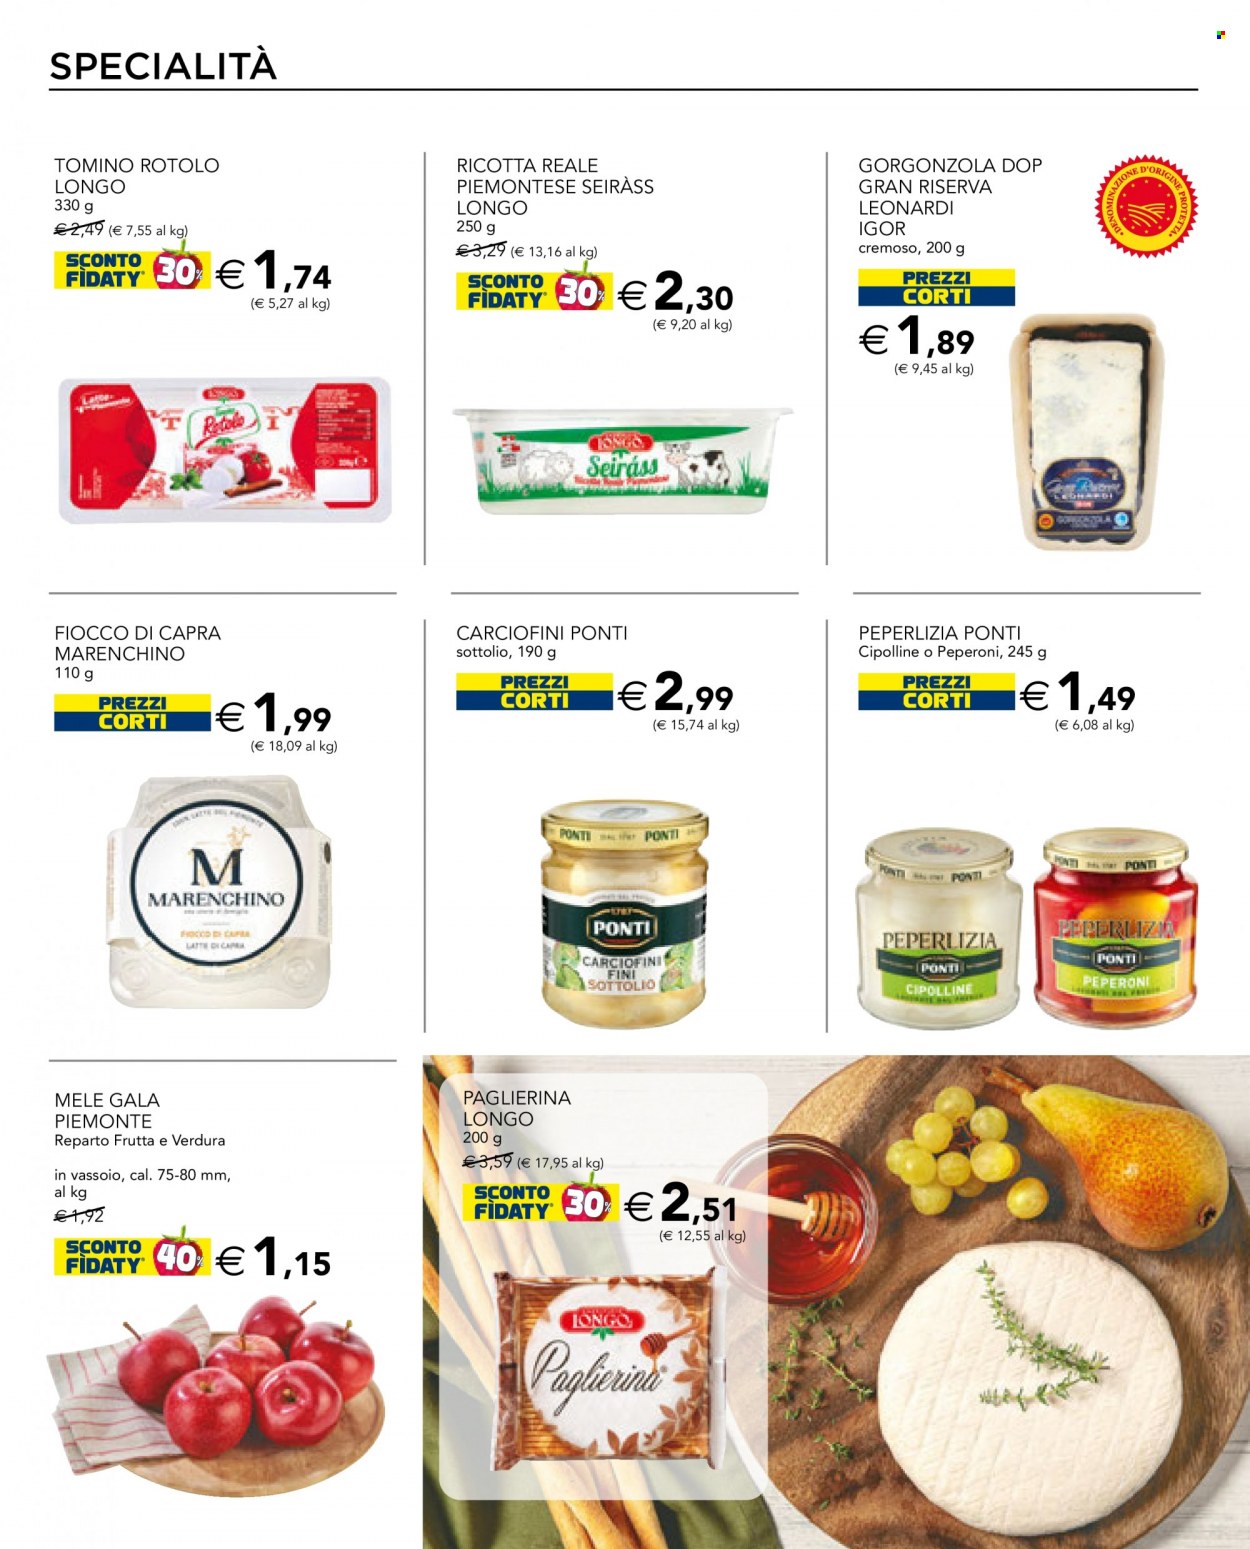 thumbnail - Volantino Esselunga - 30/9/2021 - 13/10/2021 - Prodotti in offerta - carciofi, mele, formaggio, ricotta, gorgonzola, tomino, peperlizia, Ponti. Pagina 4.